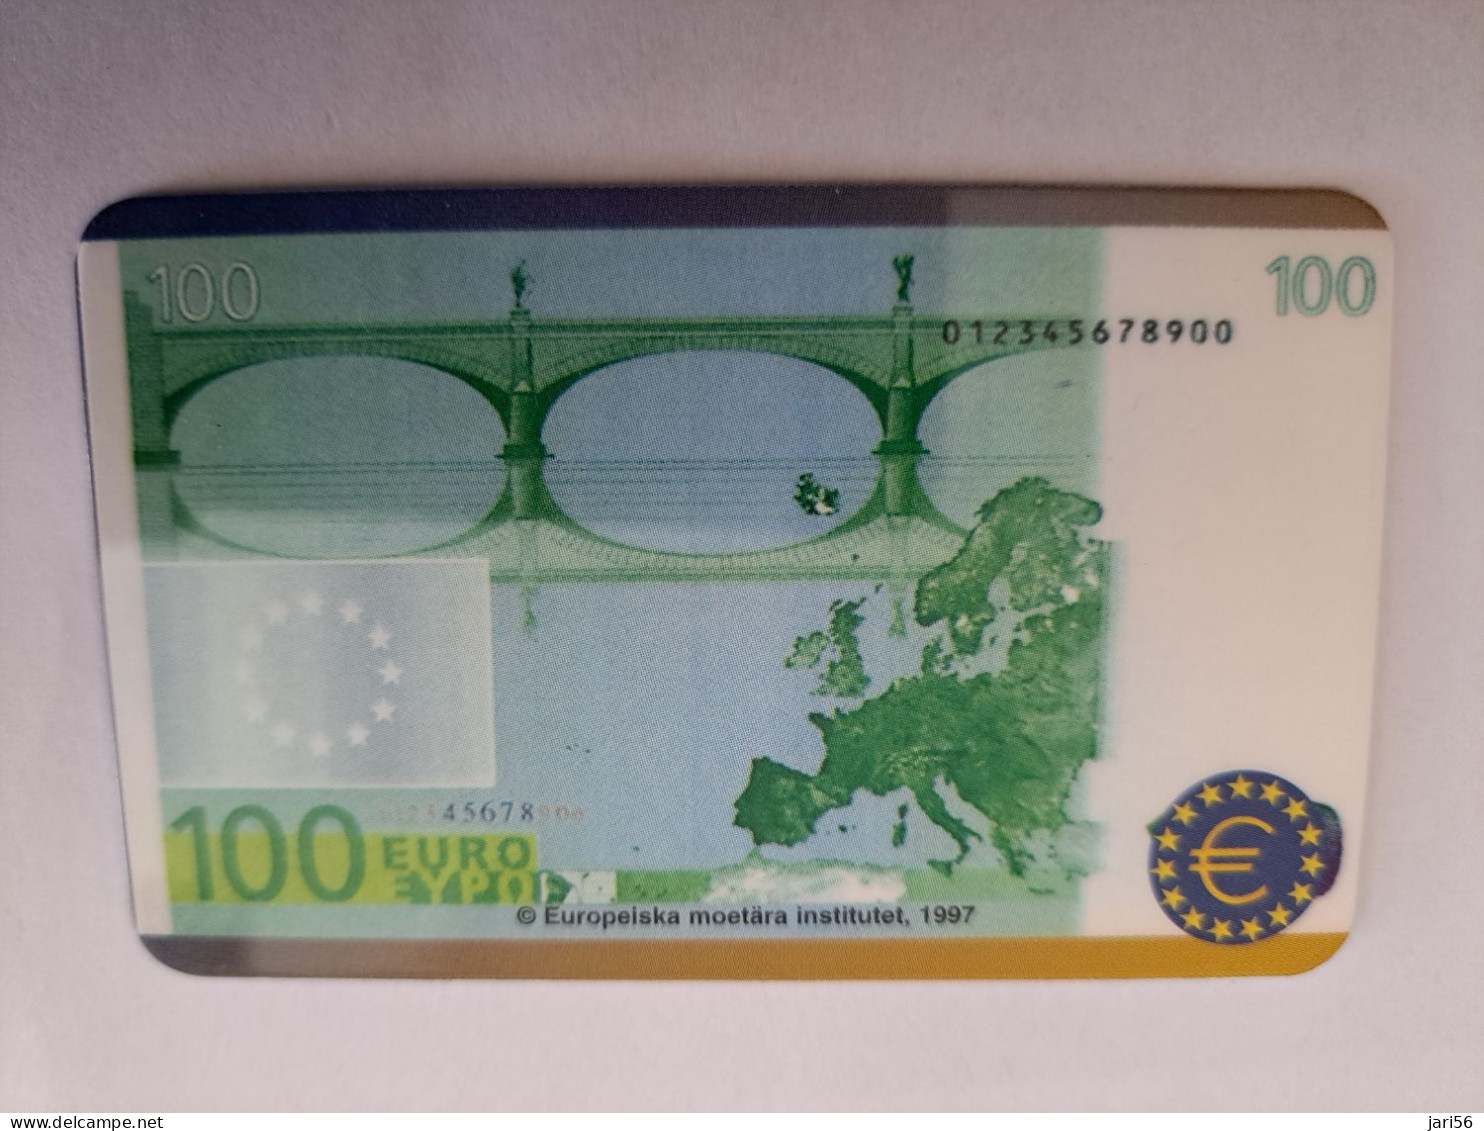 GREAT BRITAIN   20 UNITS   / EURO COINS/ BILJET 100 EURO    (date 09/ 98)  PREPAID CARD / MINT      **13308** - [10] Sammlungen